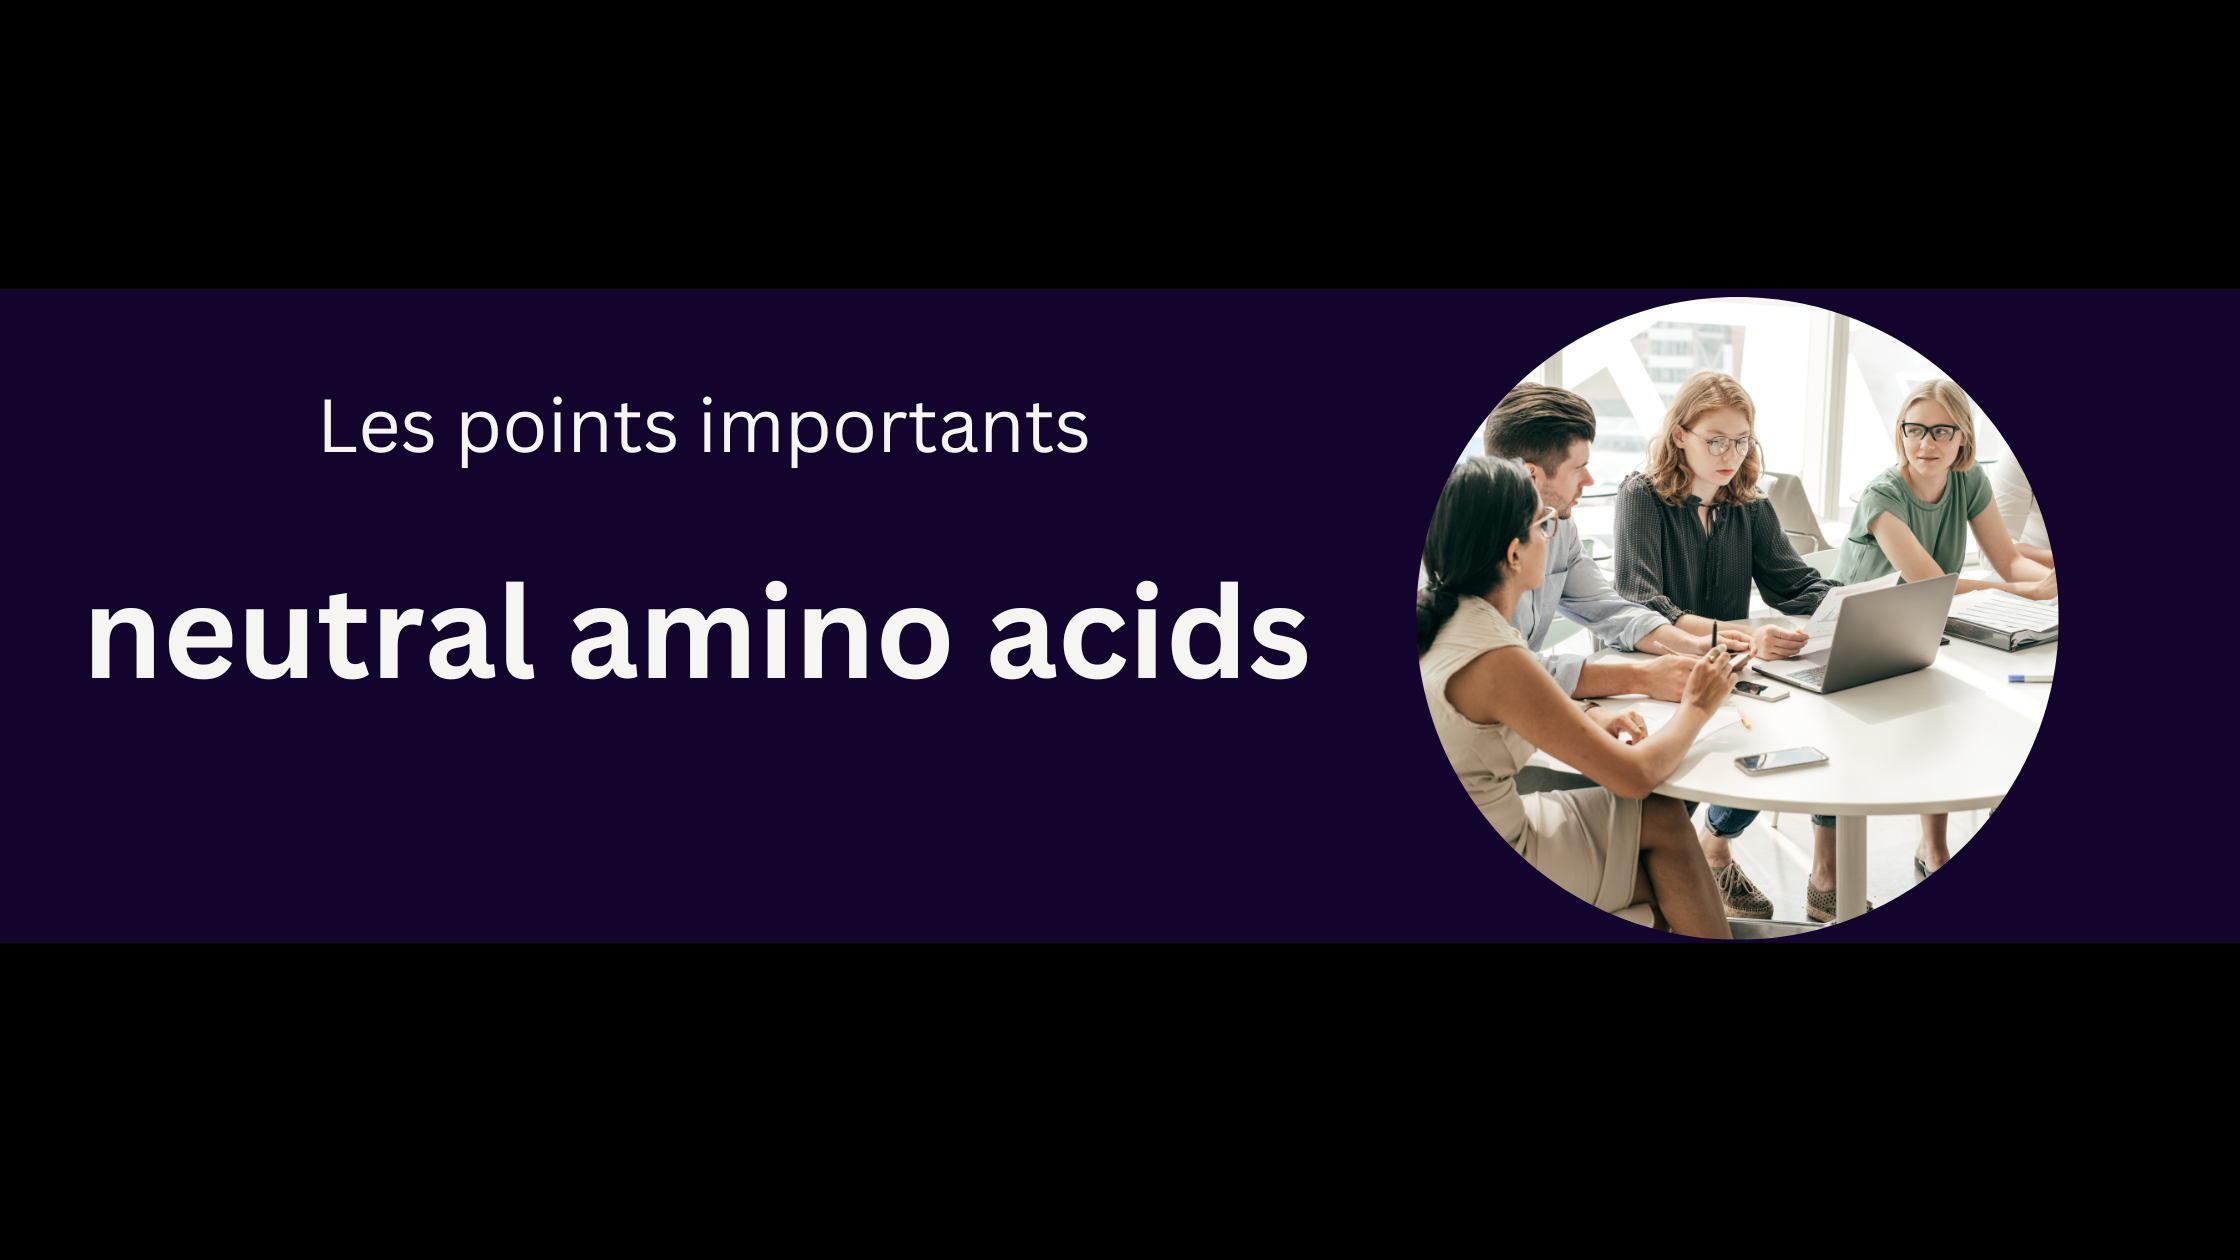 neutral amino acids | Les points importants